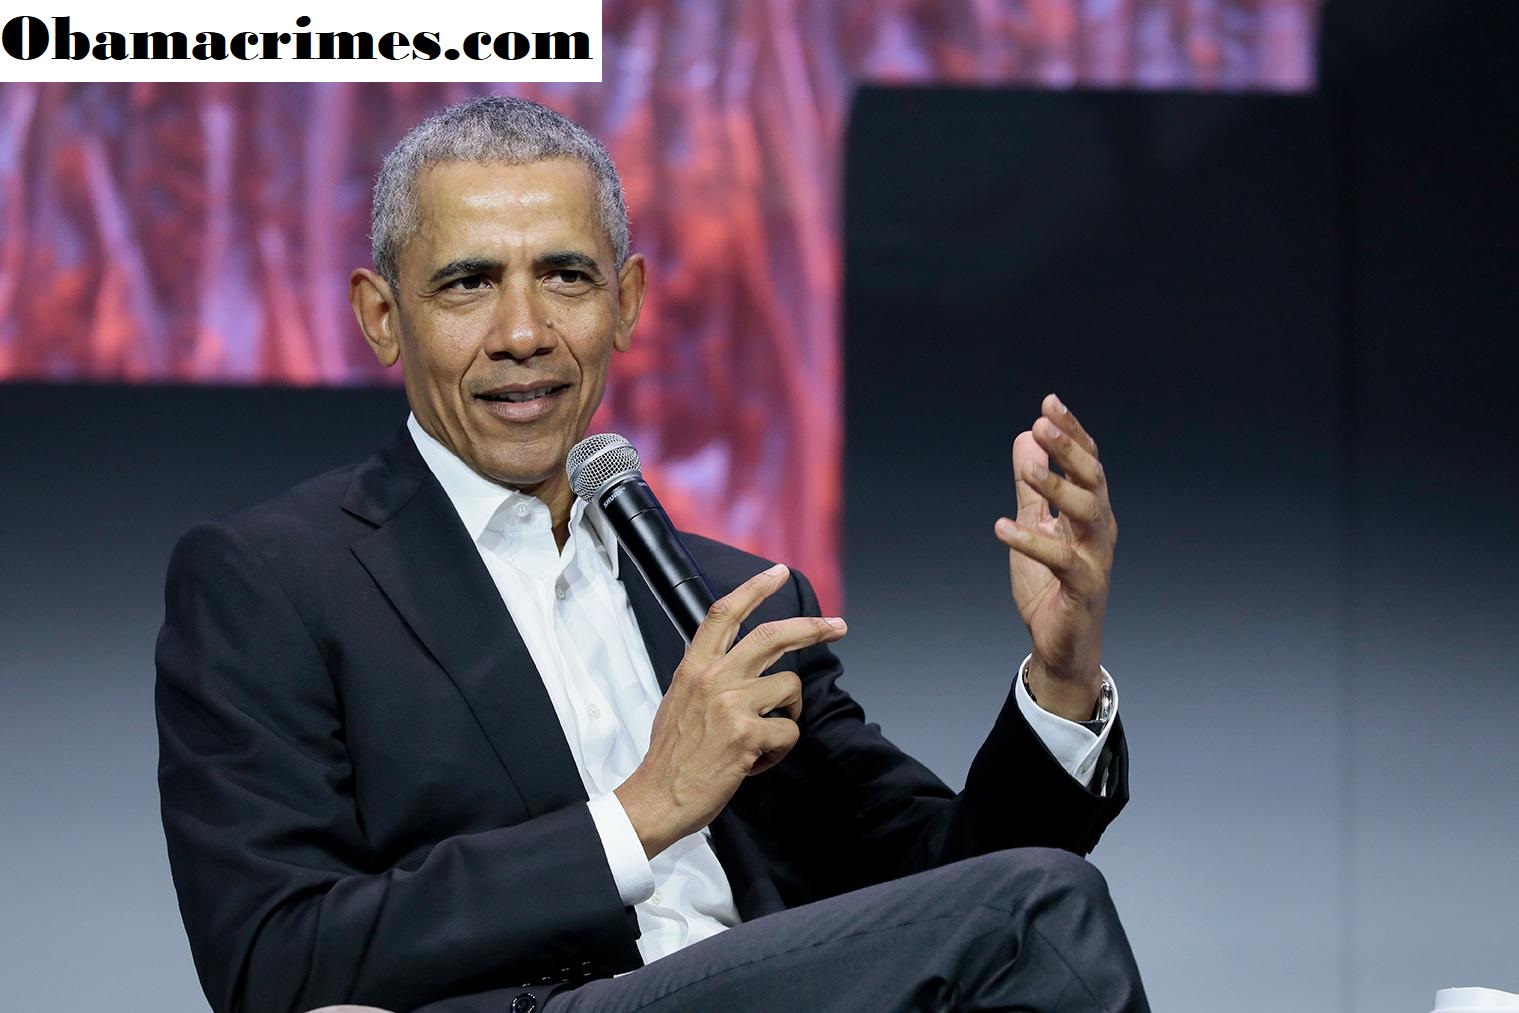 Seberapa Hebat Barack Obama Yang Belum Kalian Ketahui